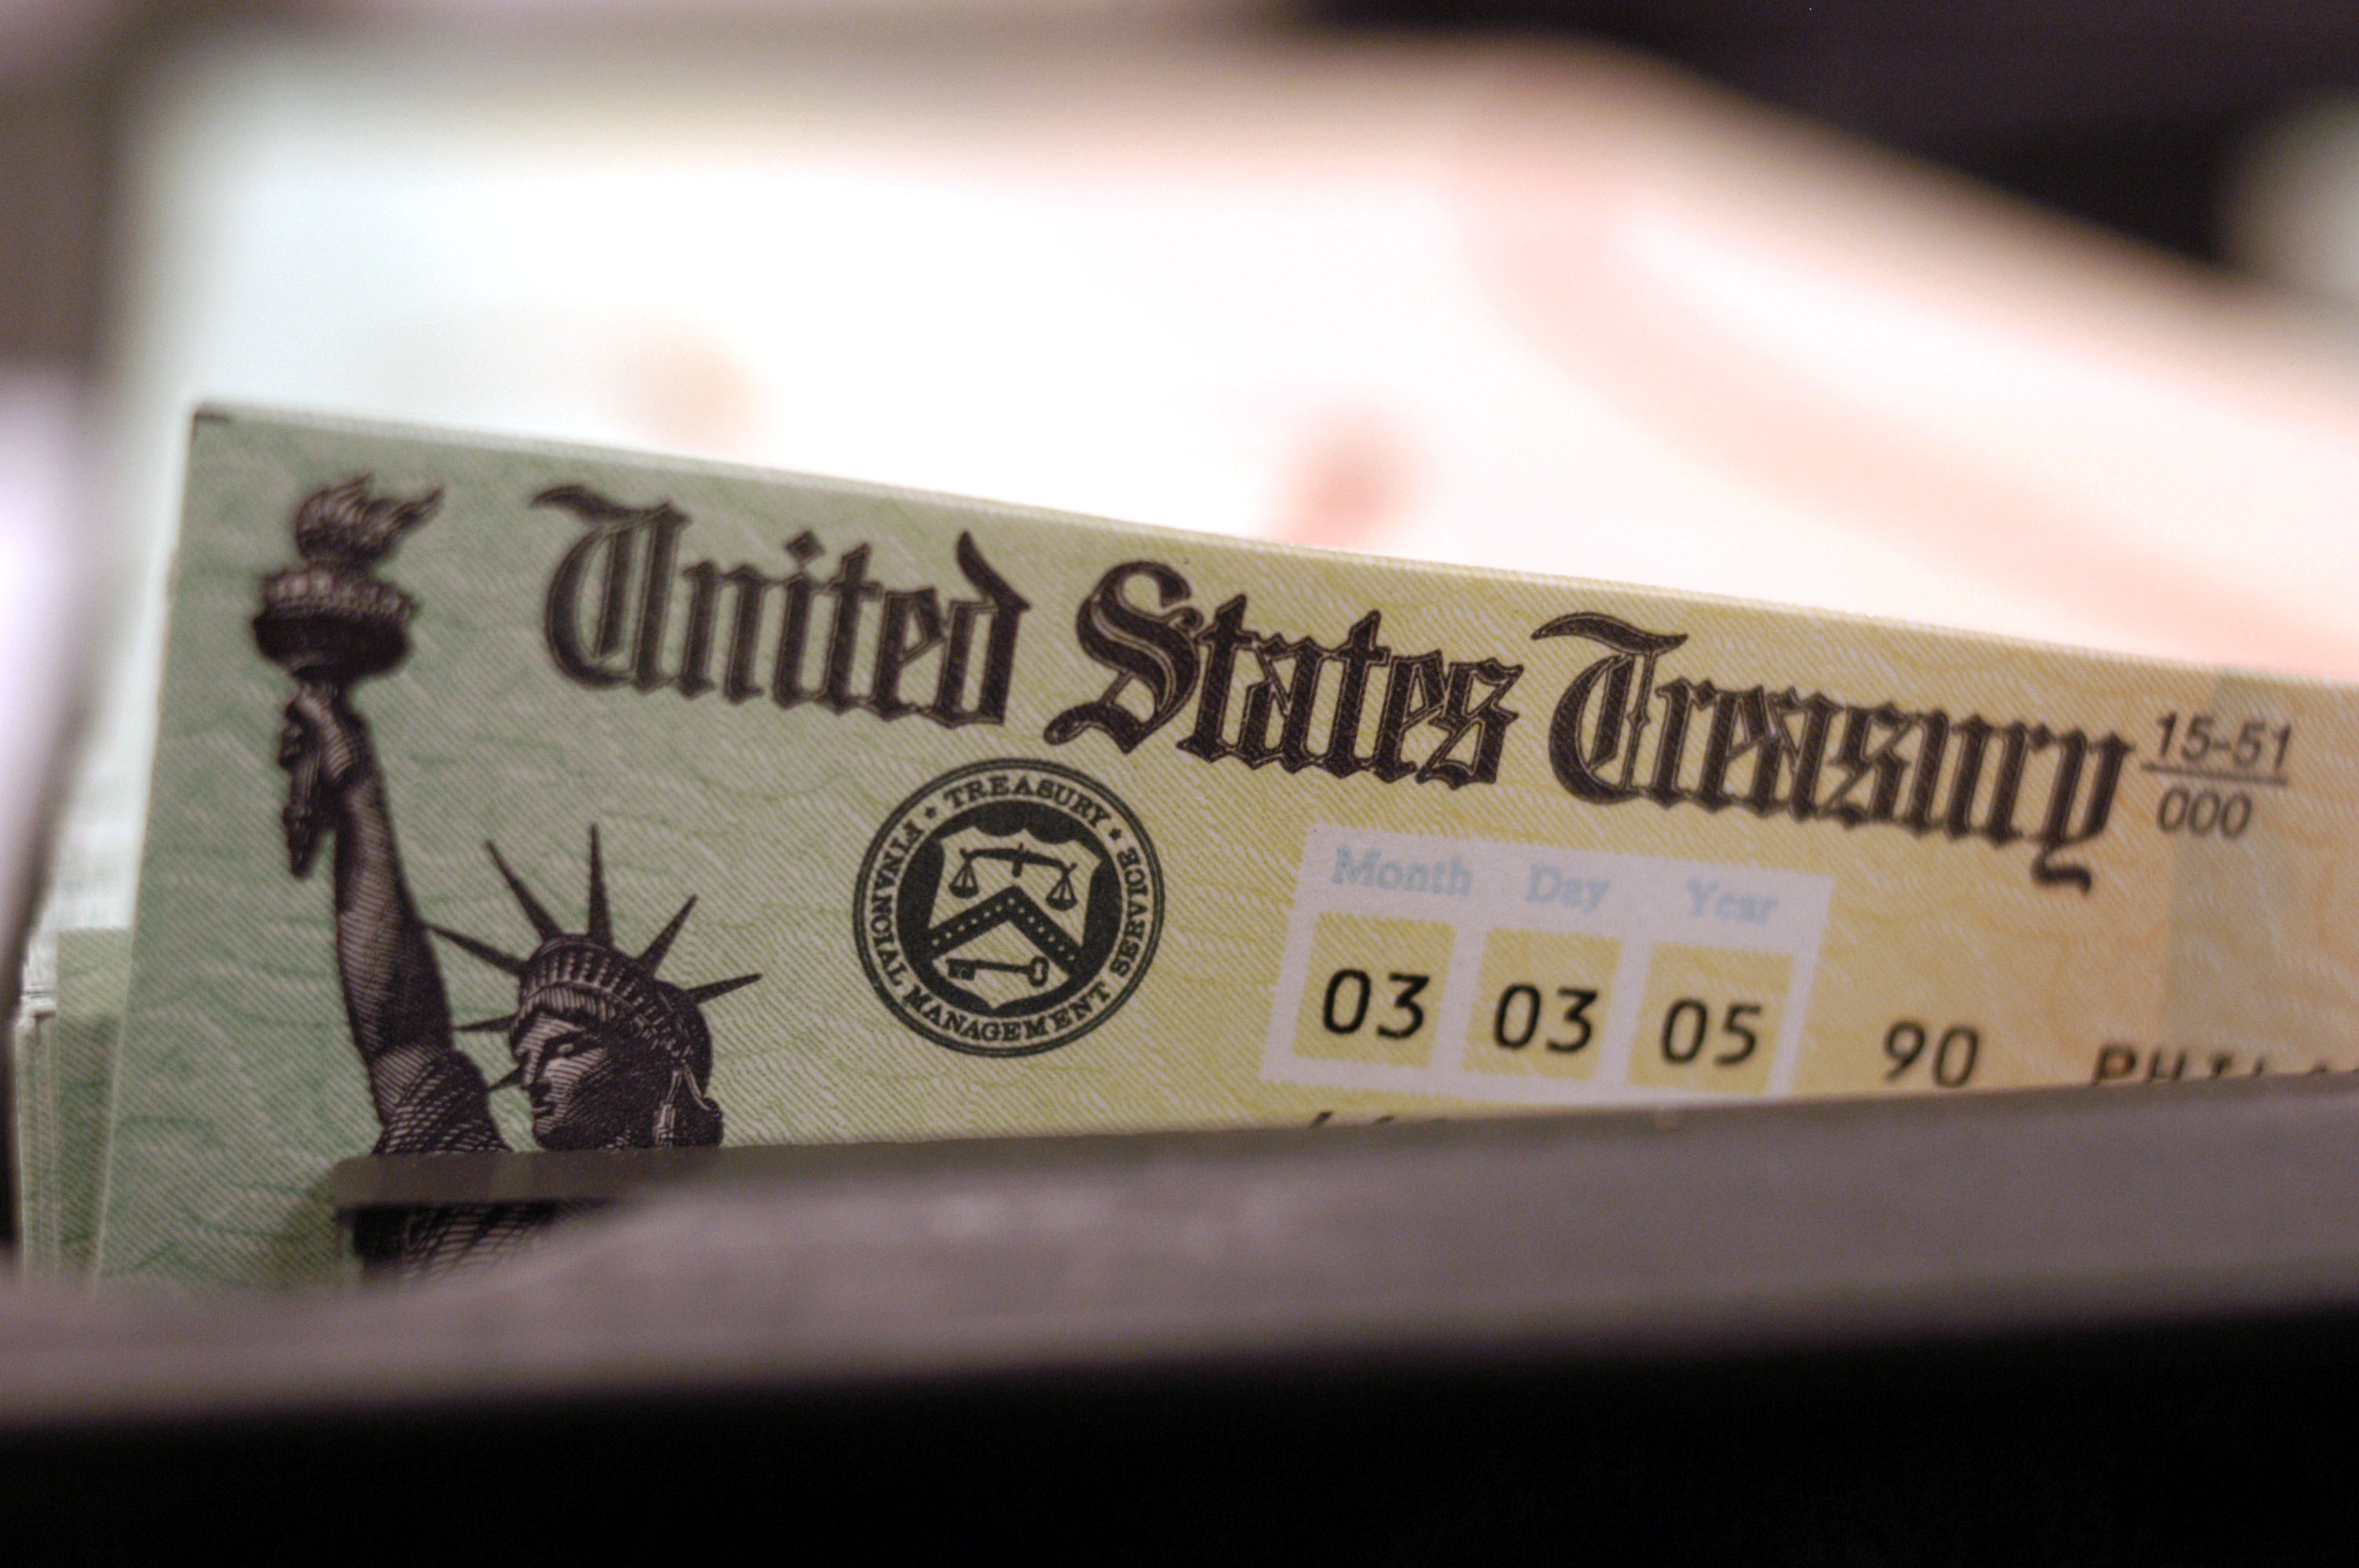 Blank Social Security checks are run through a printer at the U.S. Treasury printing facility. (Getty)